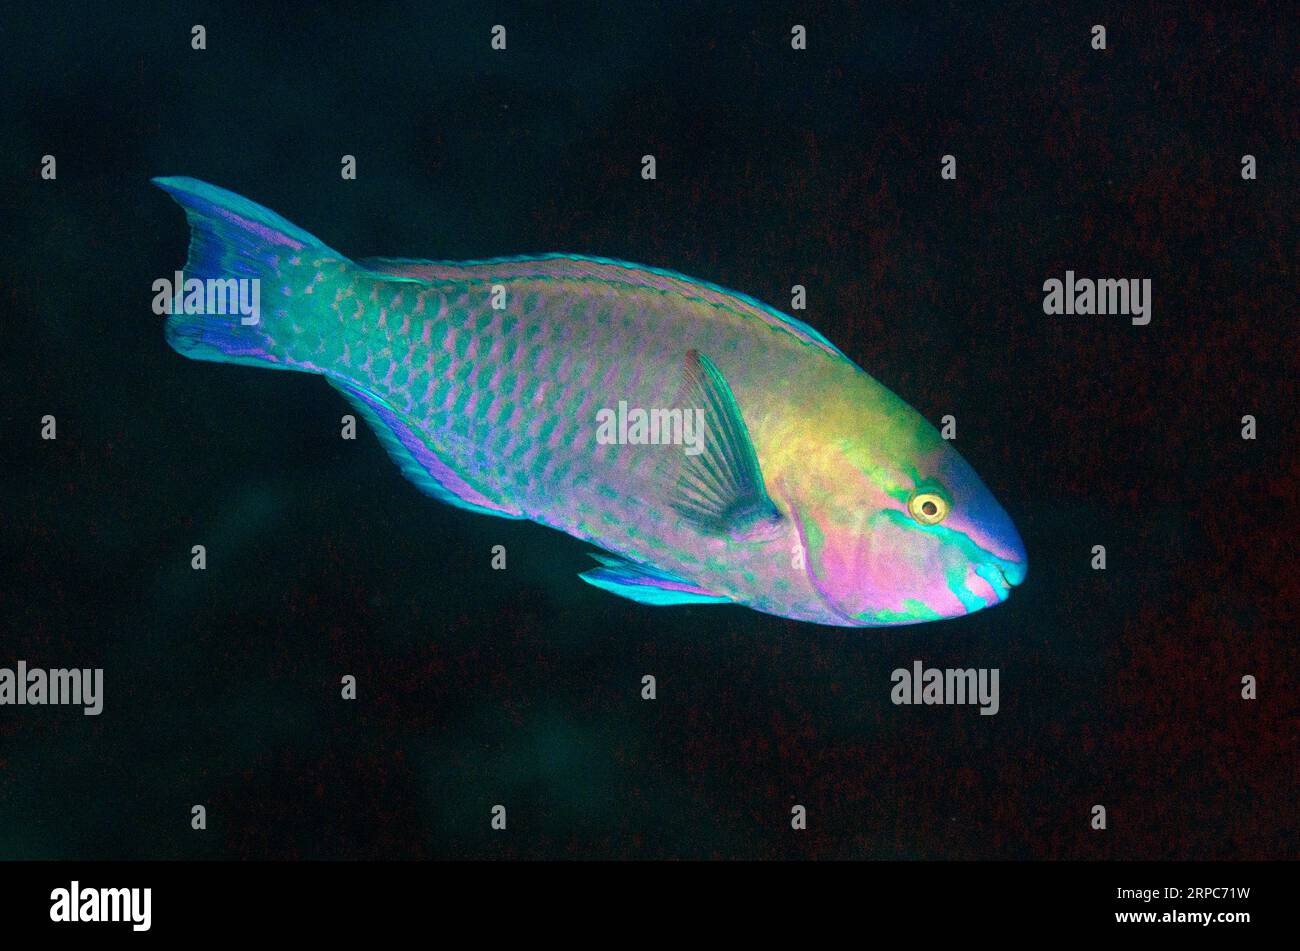 Palenose Parrotfish, Scarus psittacus, Gemaf dive site, Weda, Halmahera, North Maluku, Indonesia, Halmahera Sea Stock Photo